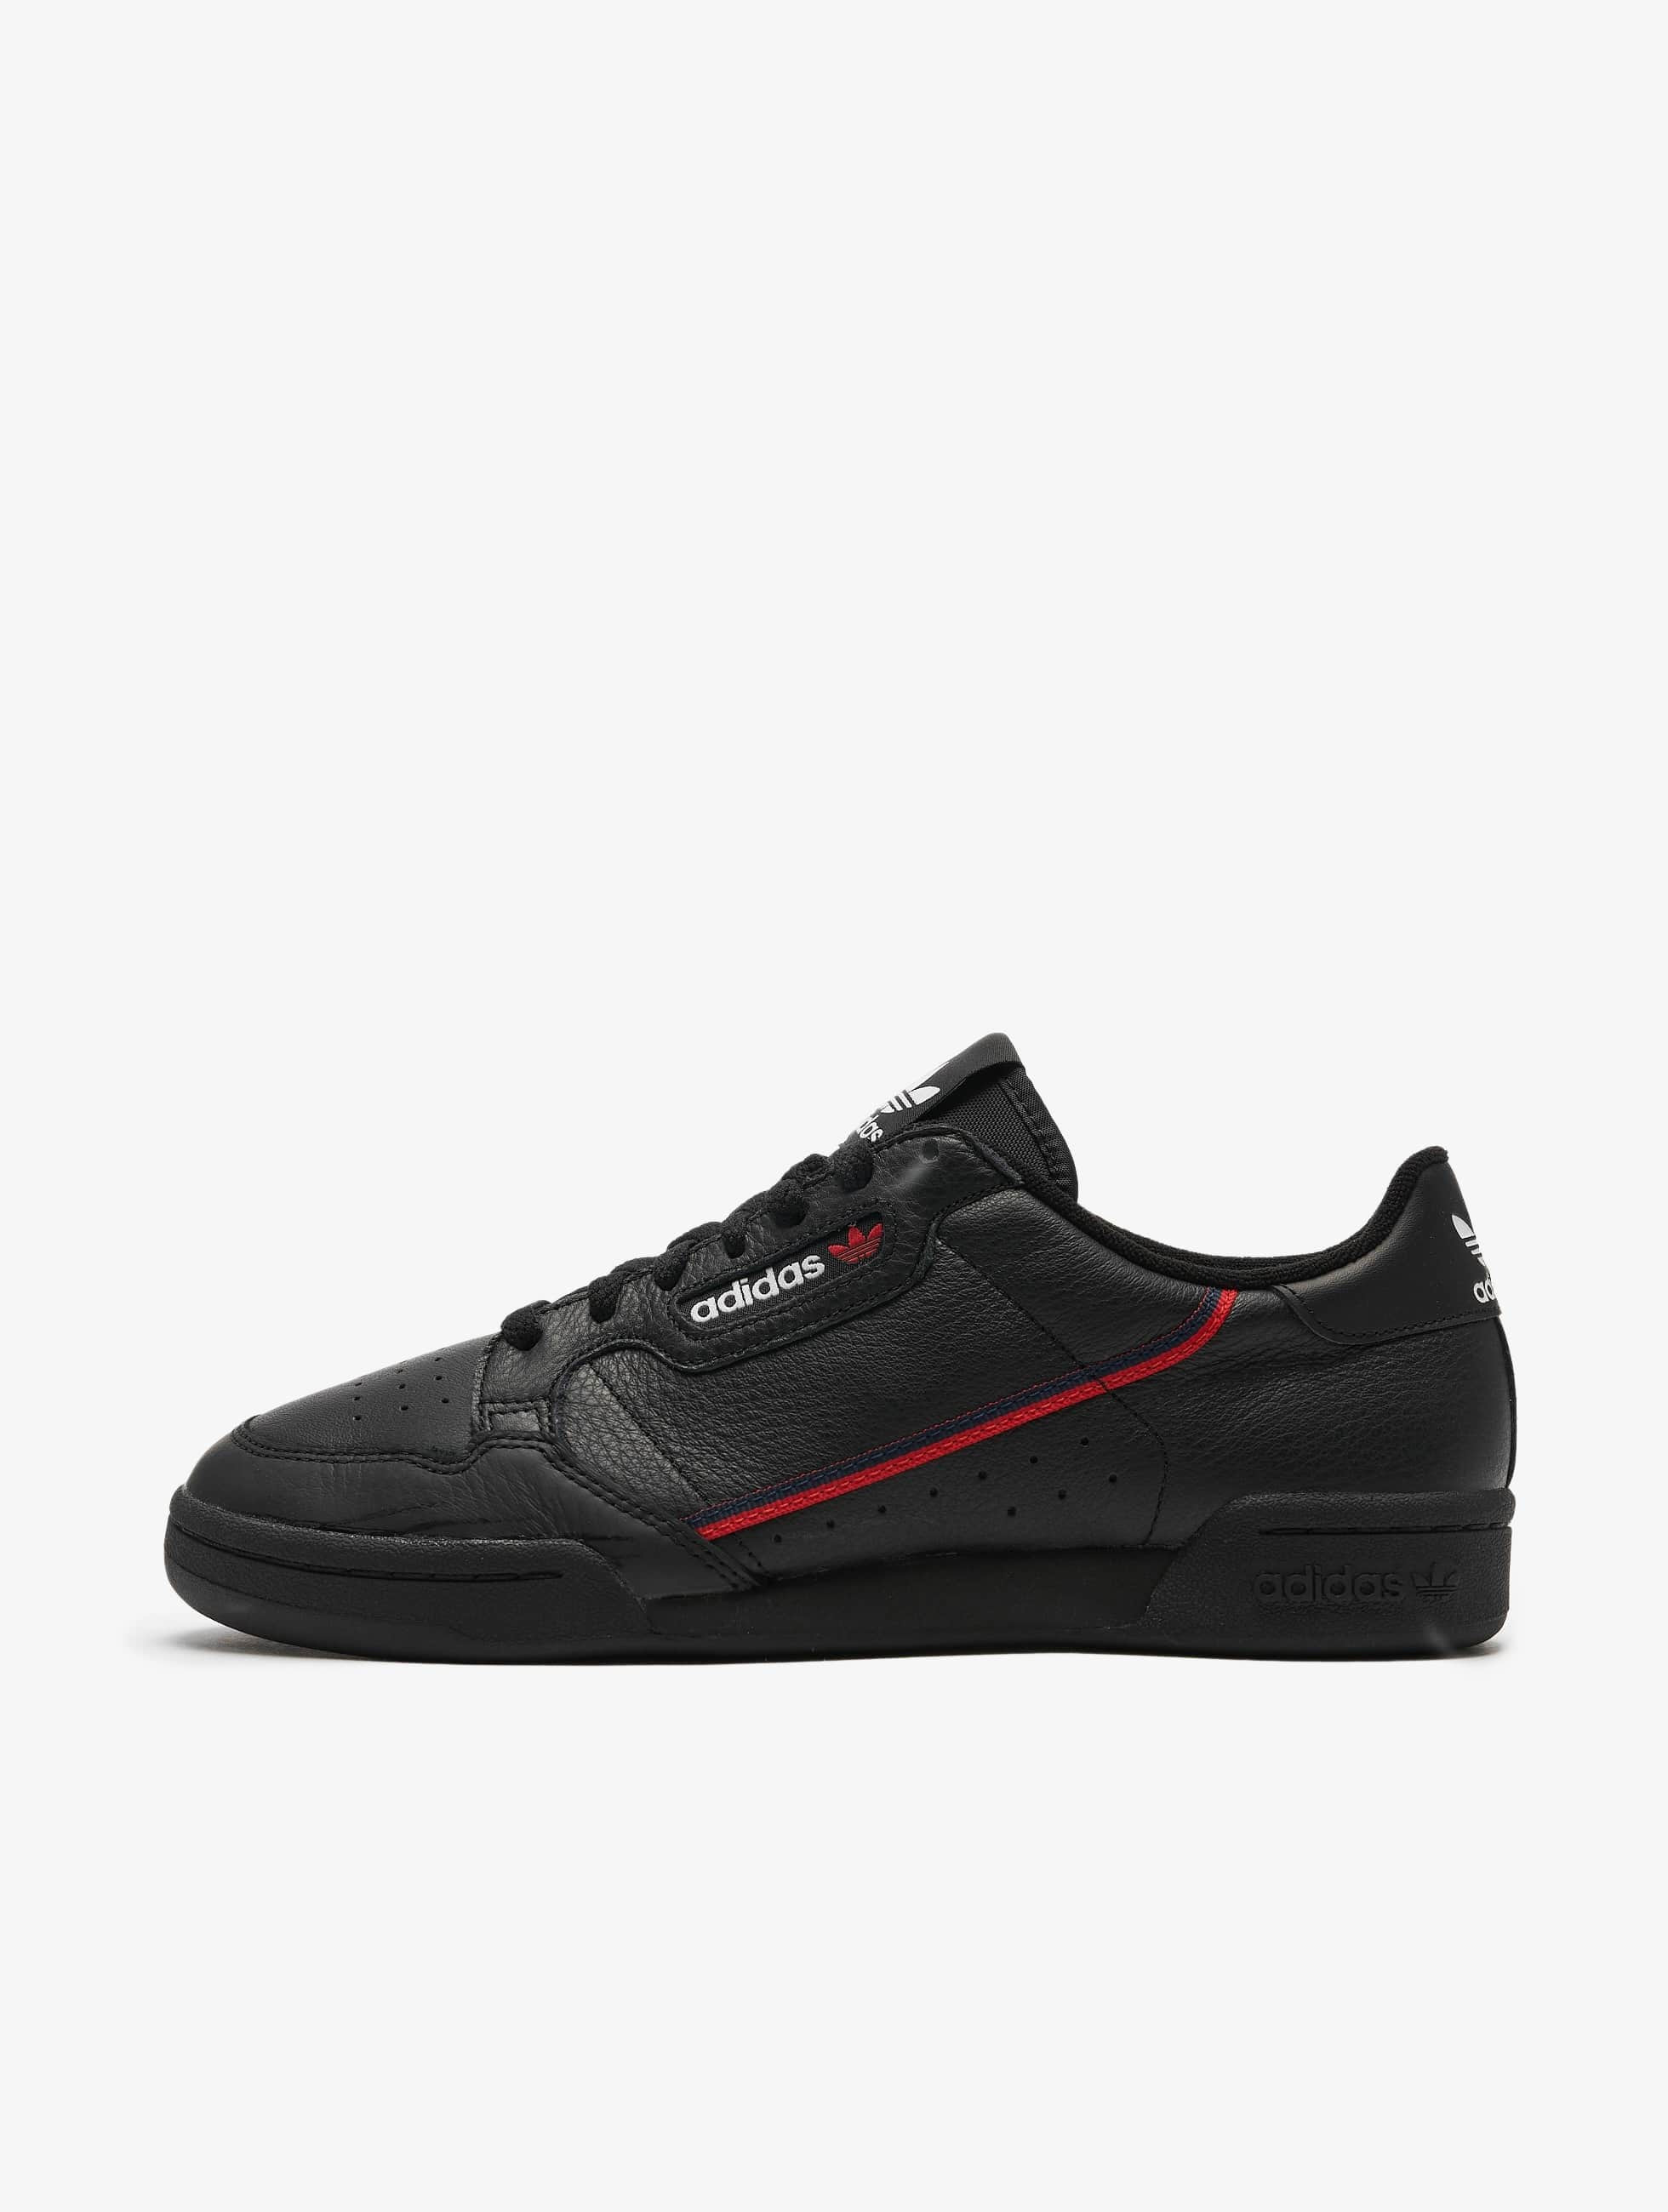 adidas classic noir